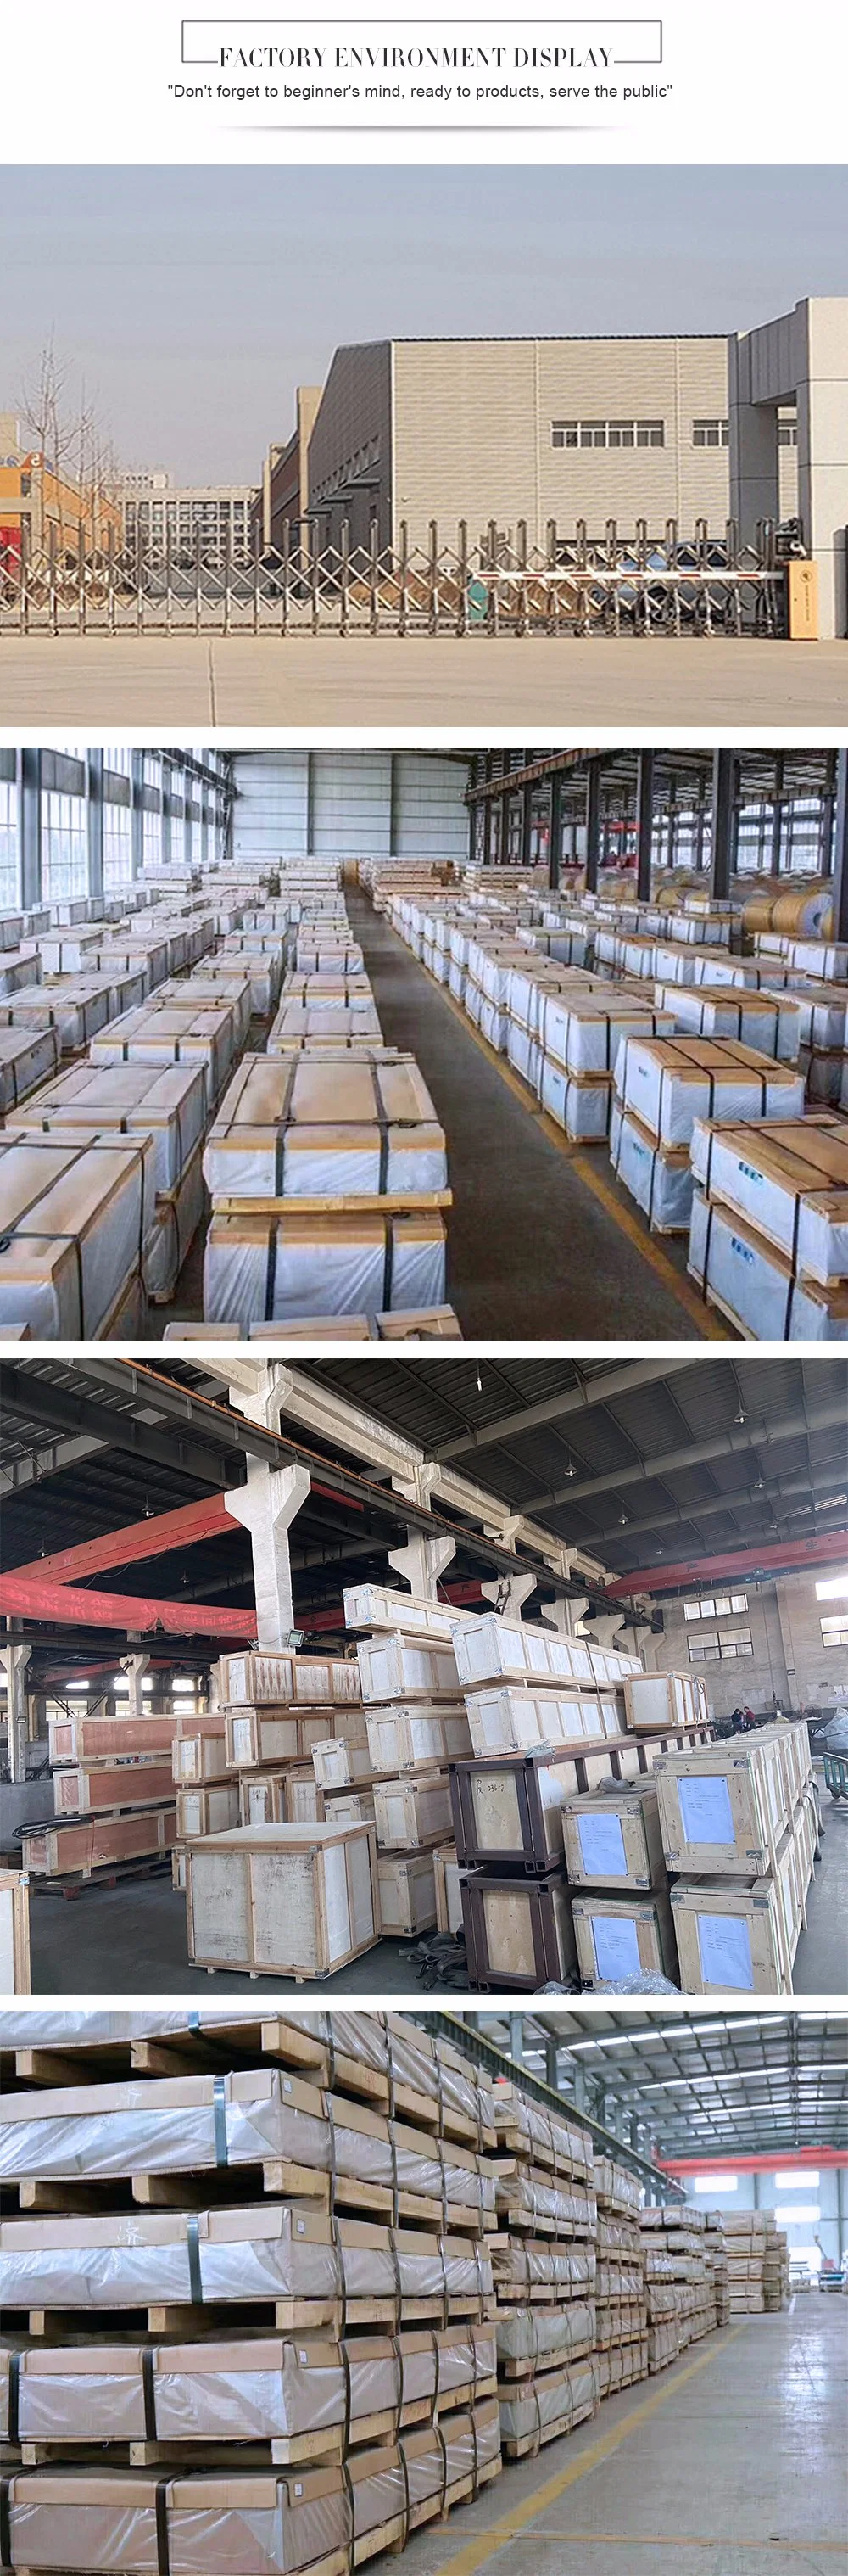 China Manufacturer Stainless Steel SUS630 Round Bar 17-4pH Iron Bar H1150